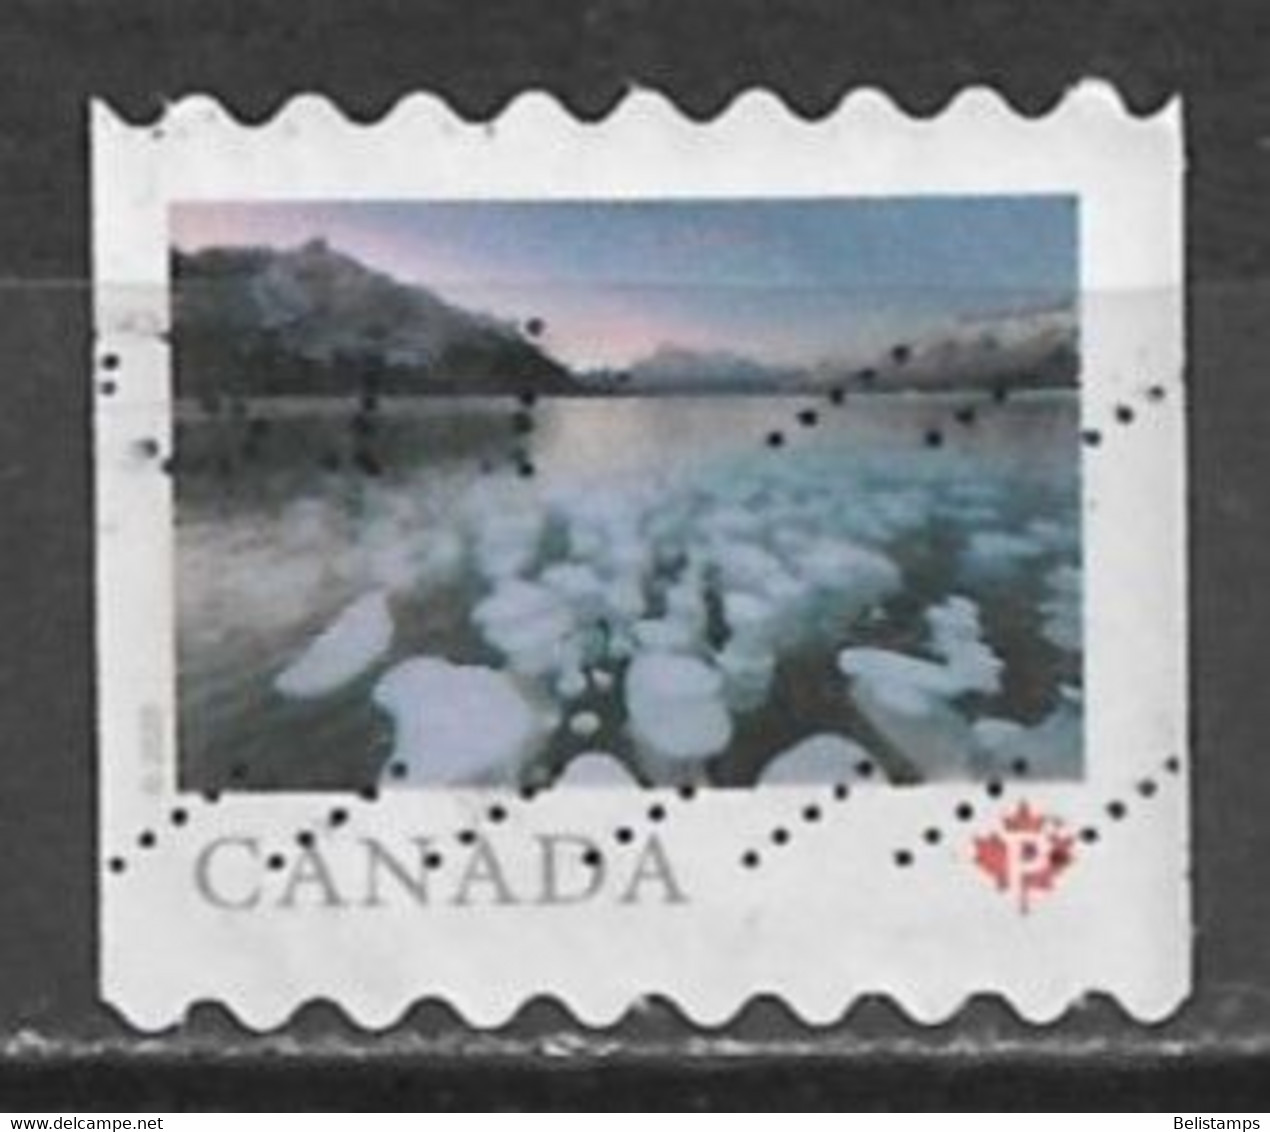 Canada 2020. Scott #3212 (U) Abraham Lake, Alberta - Roulettes